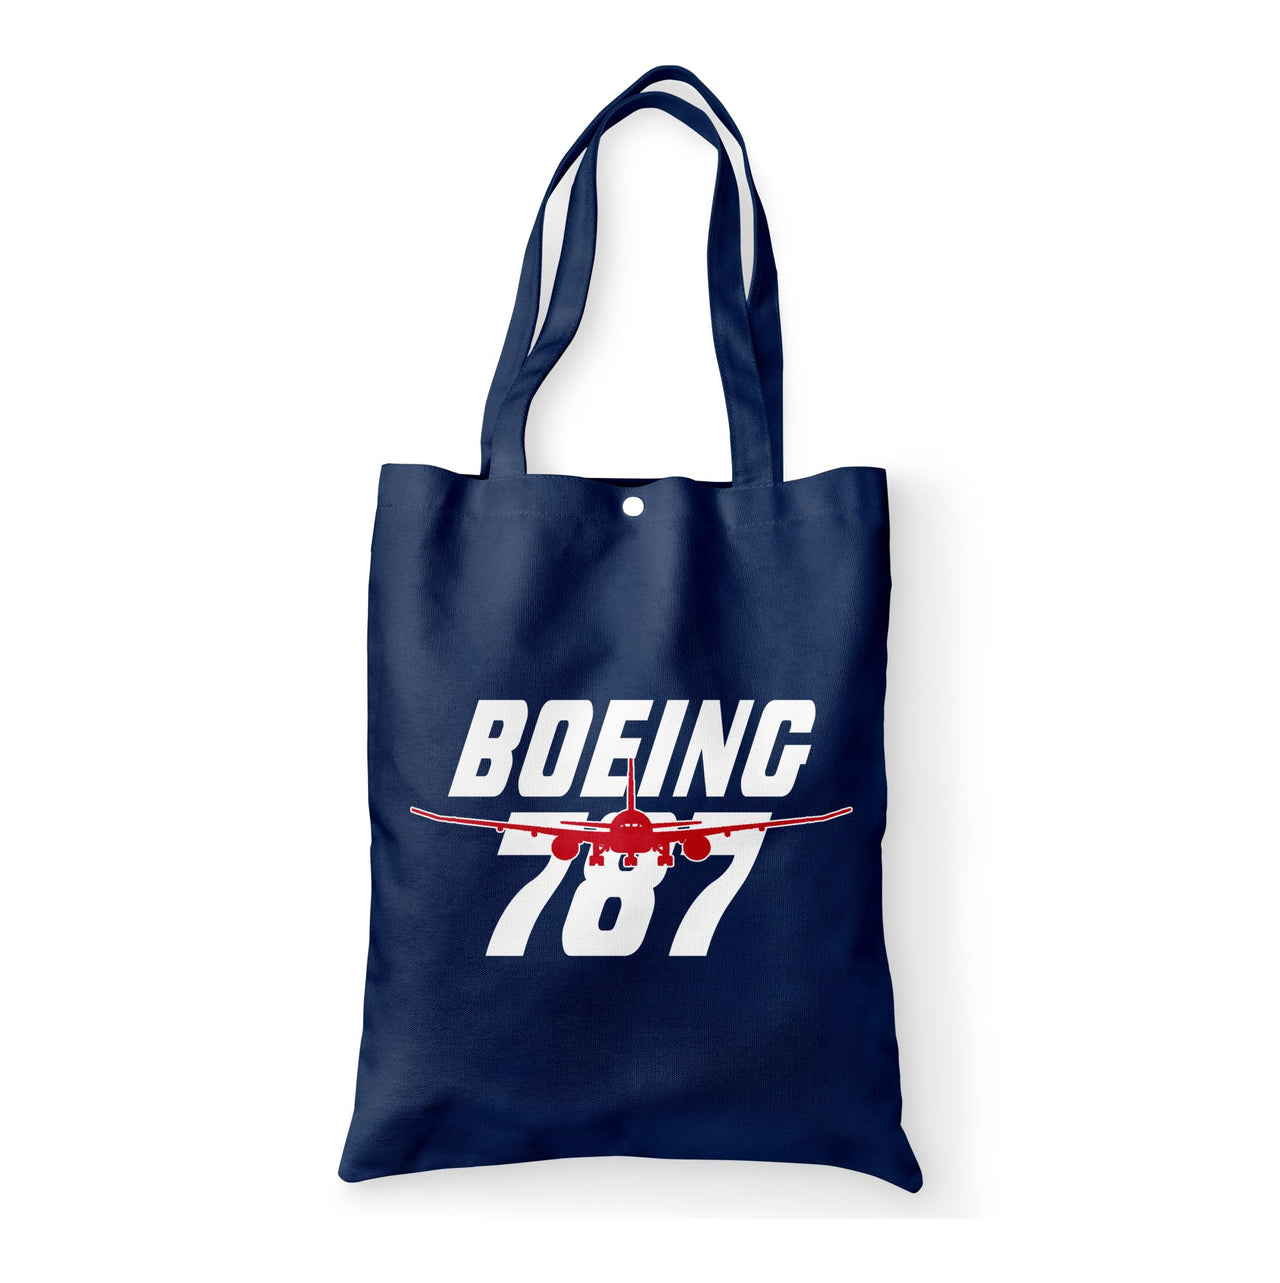 Amazing Boeing 787 Designed Tote Bags